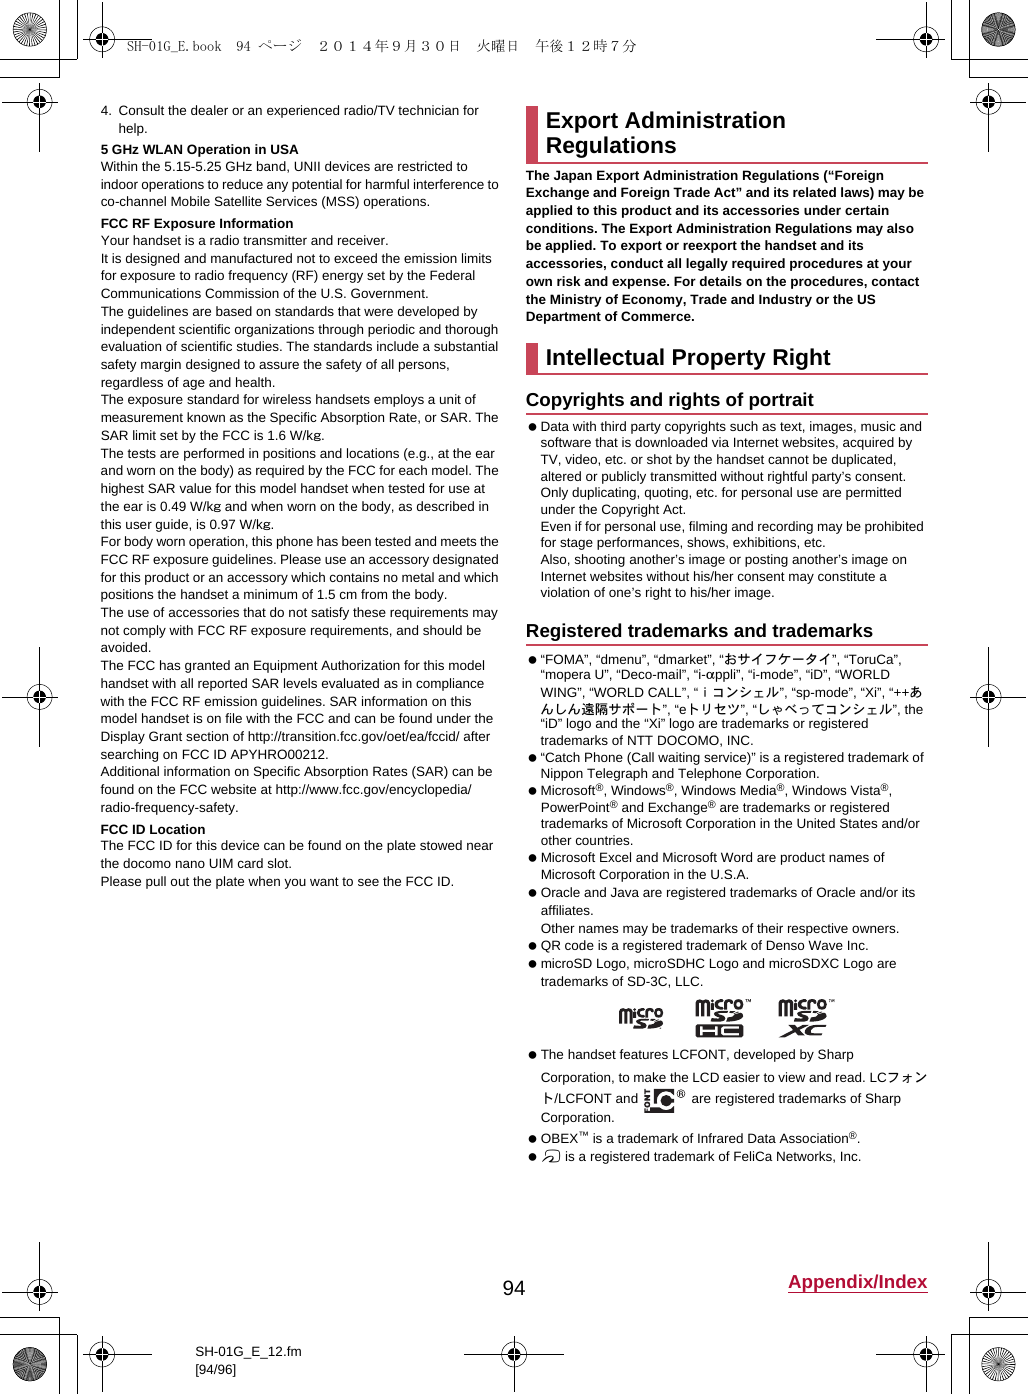 Page 24 of Sharp HRO00212 Smart Phone User Manual